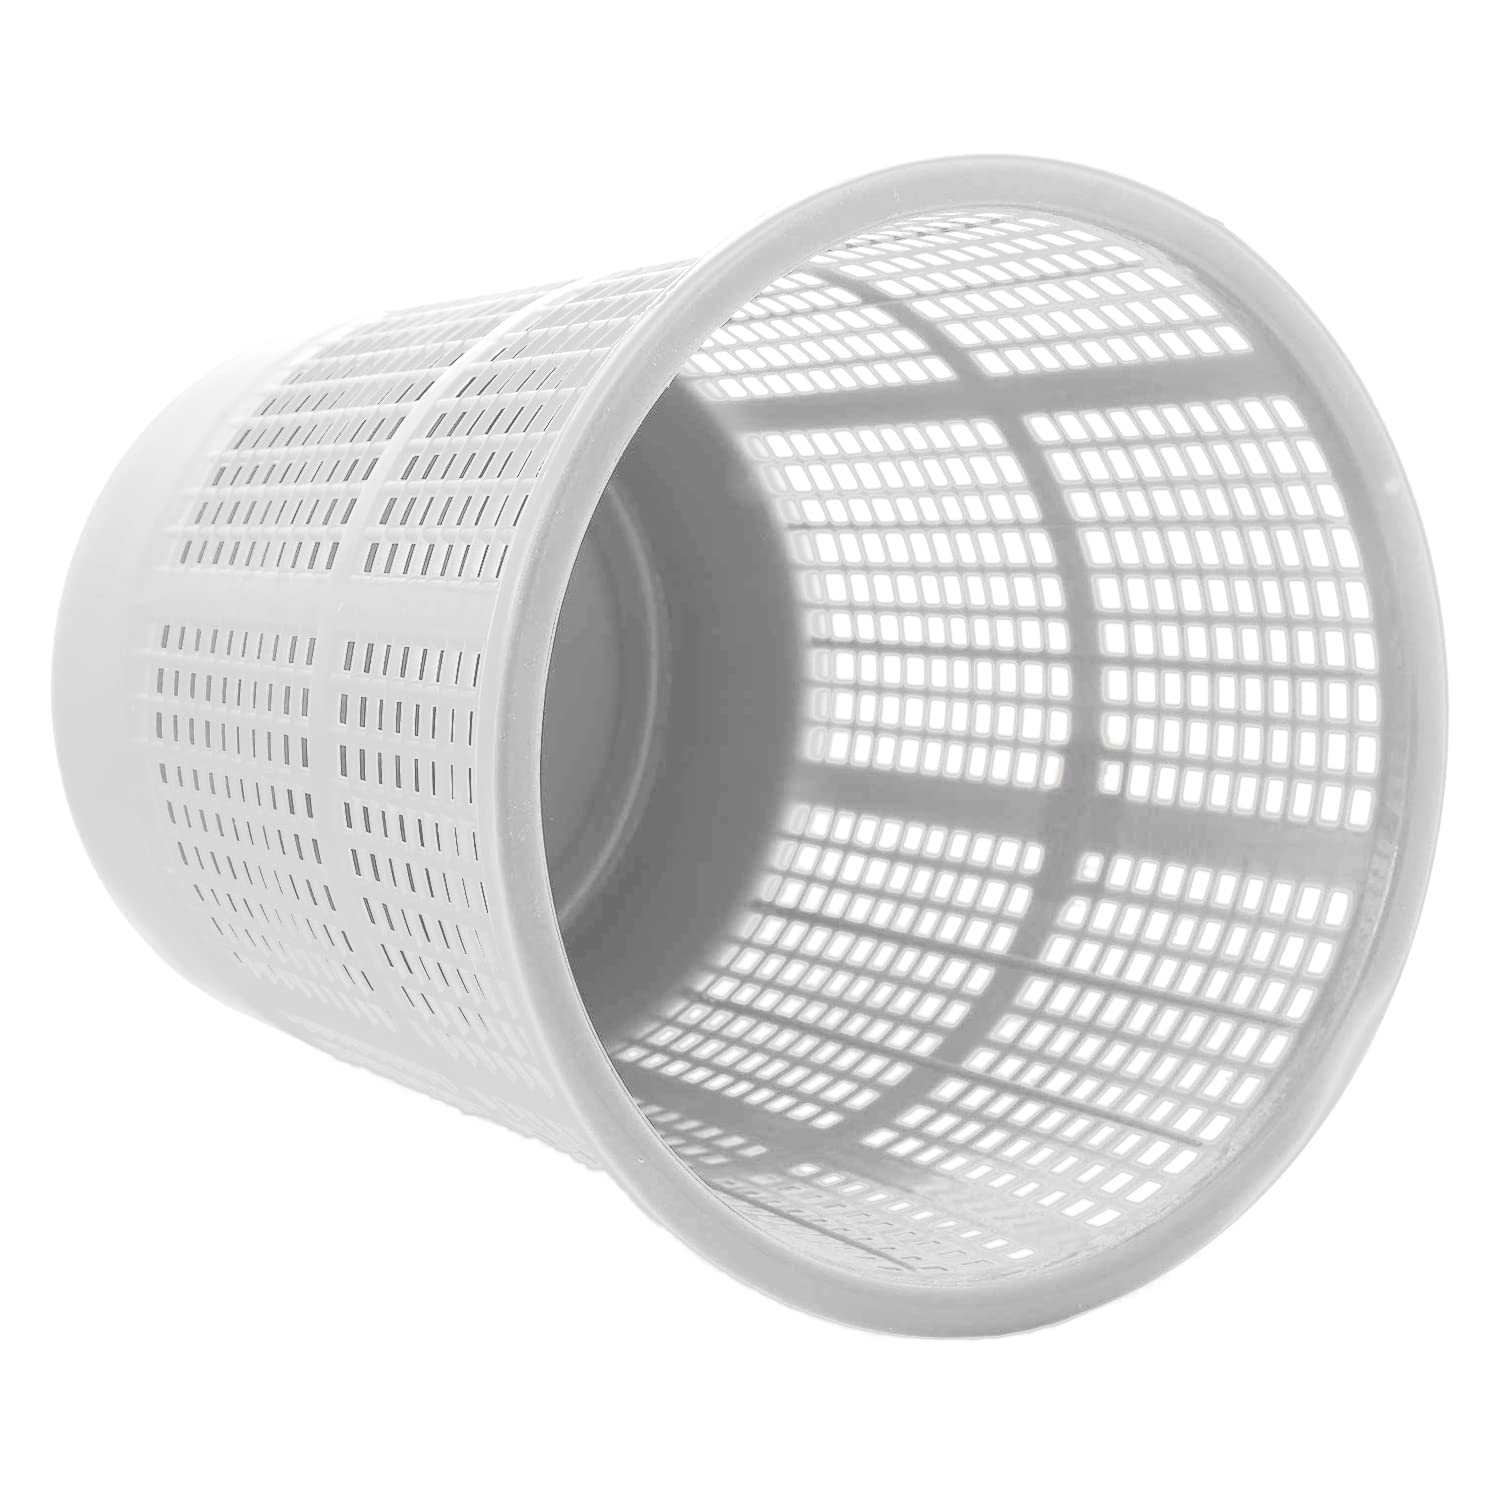 Kuber Industries Mesh Design Plastic Dustbin/Garbage Bin, 5Ltr.- Pack of 2 (White)-47KM0784